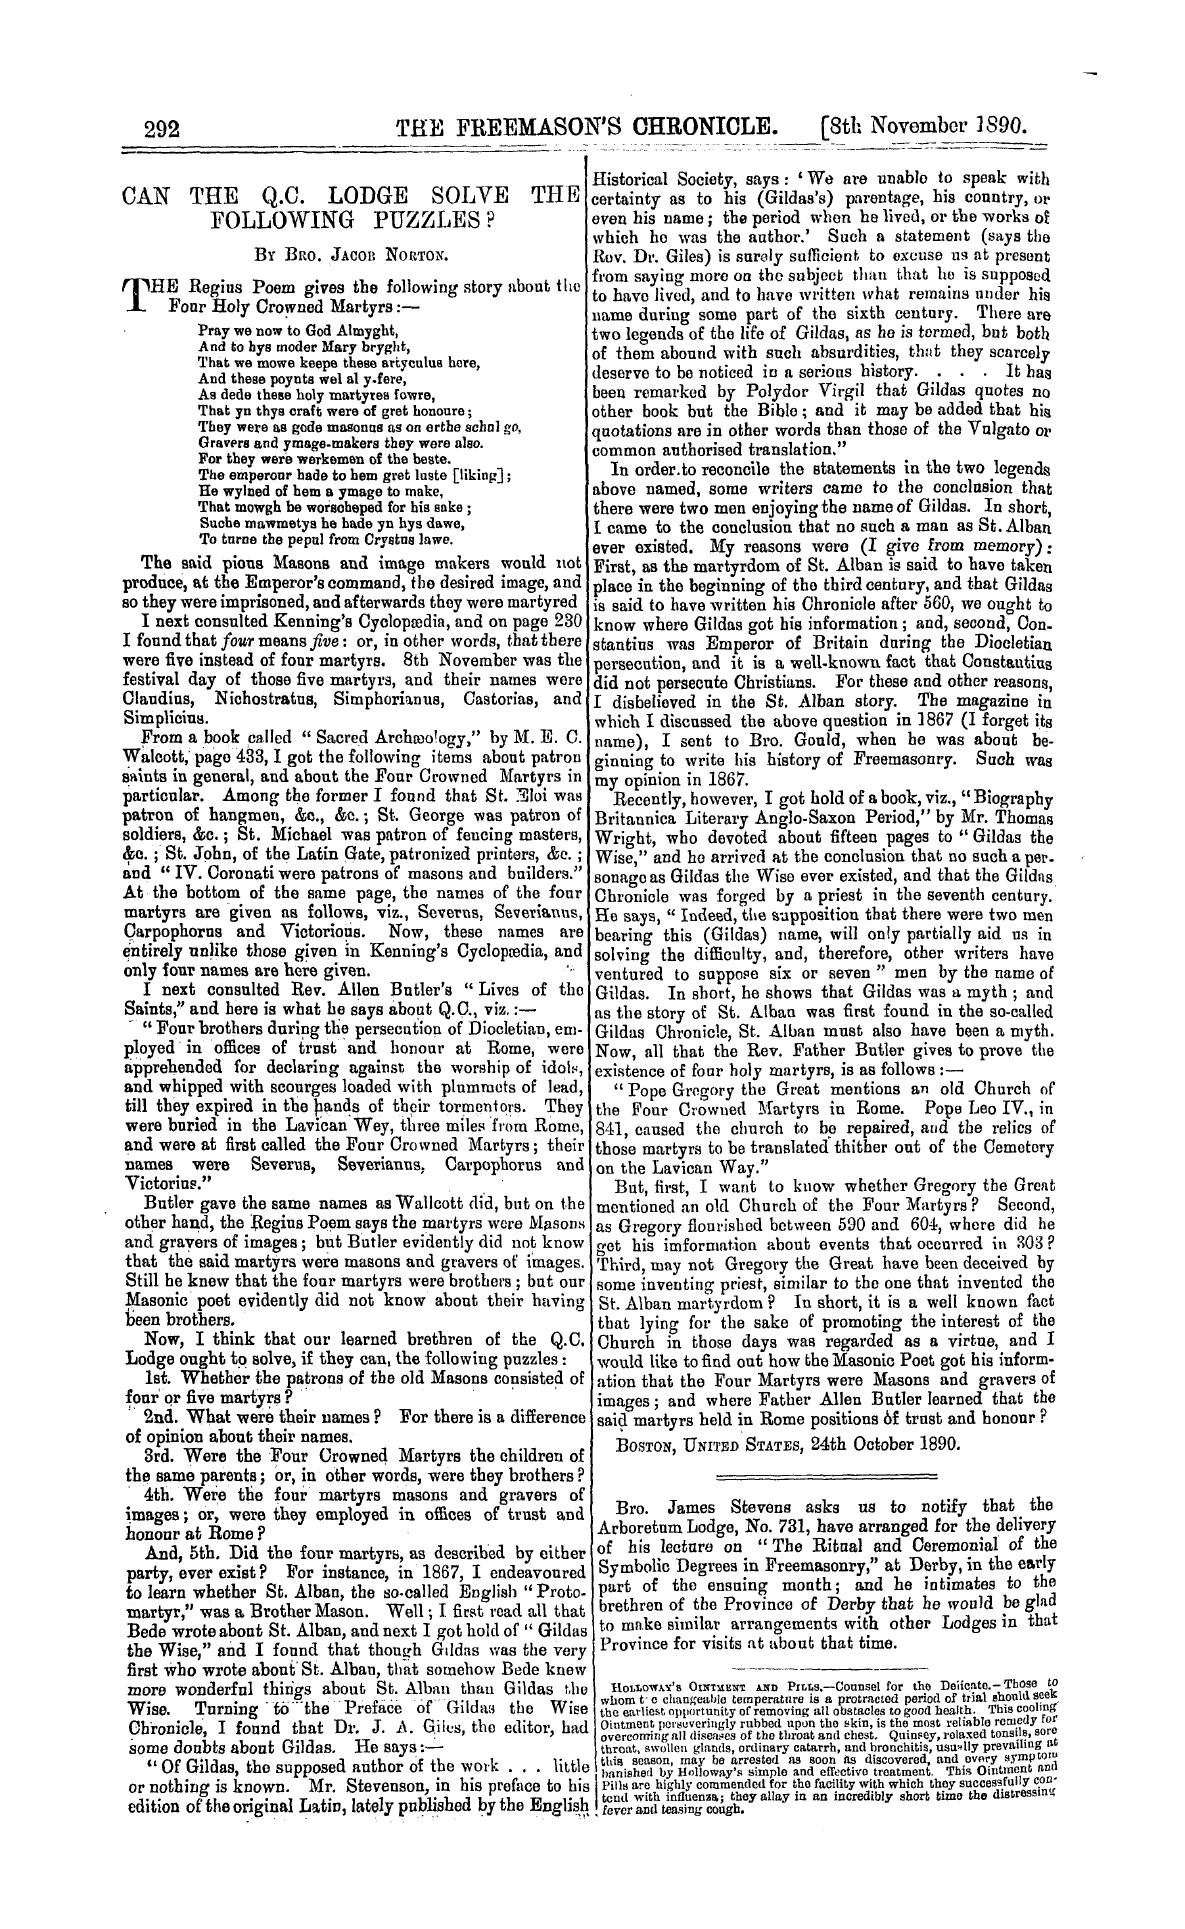 The Freemason's Chronicle: 1890-11-08: 4